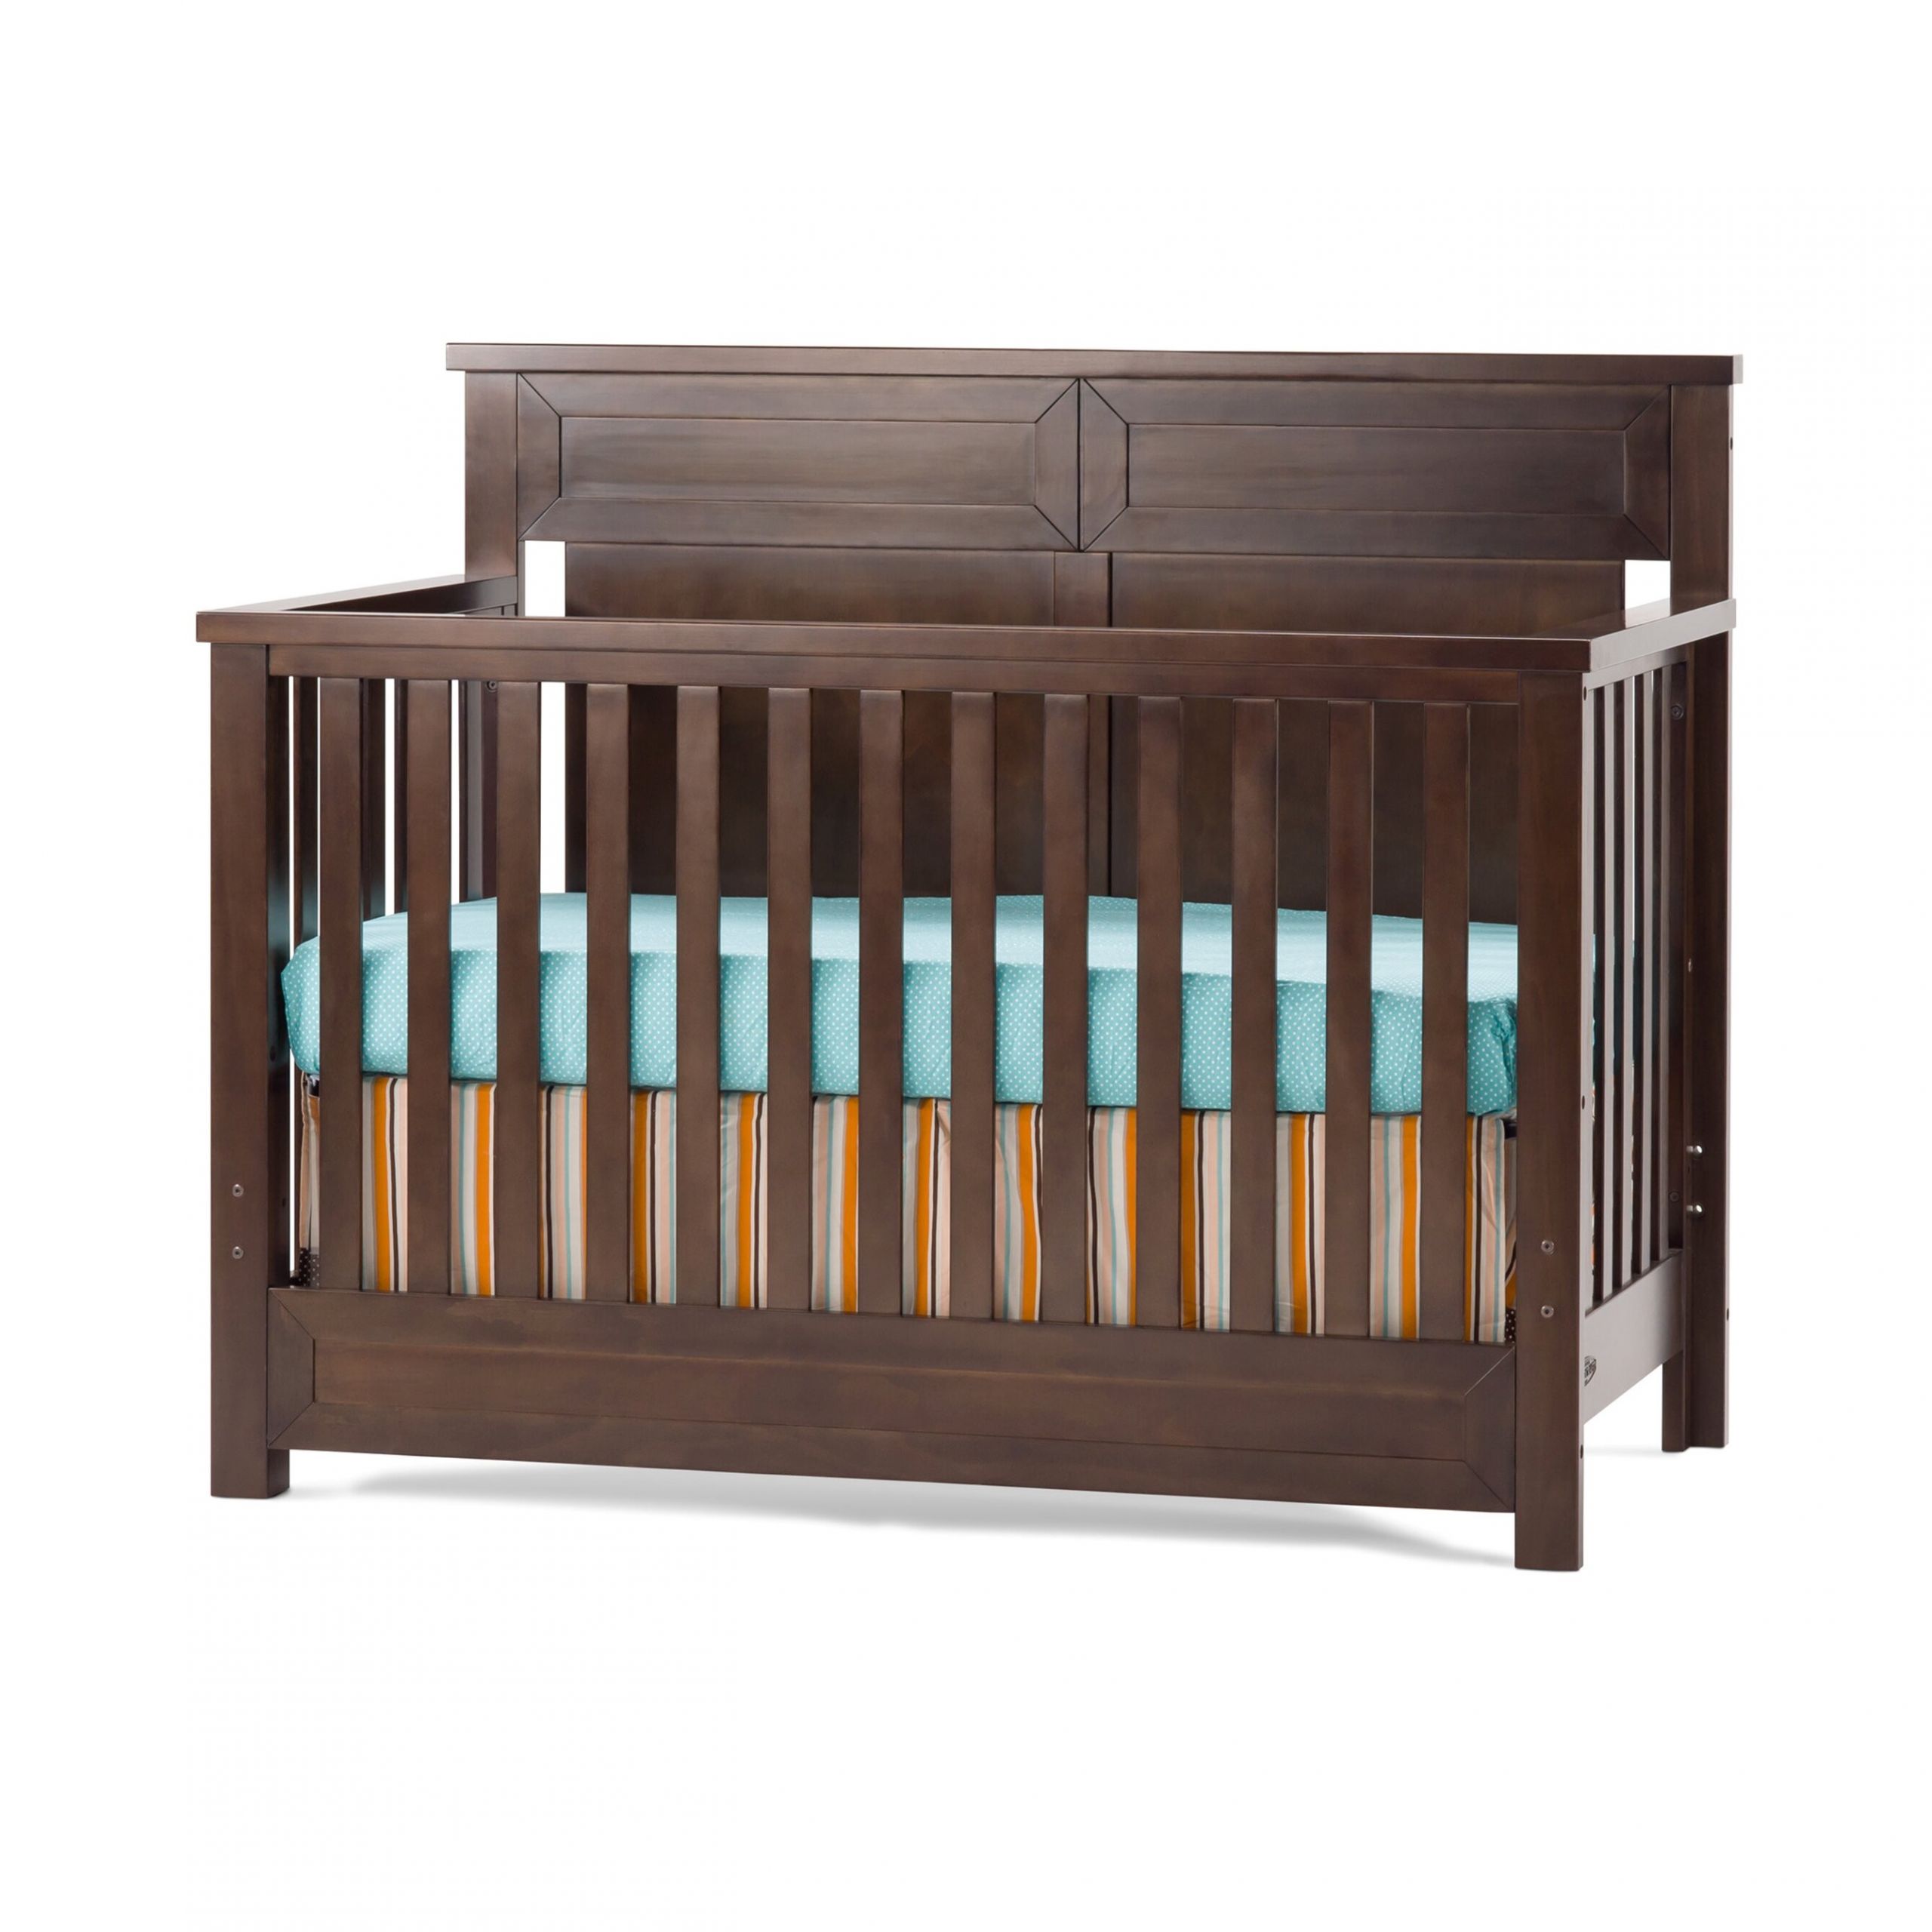 Child Craft Crib
 Child Craft Abbott 4 in 1 Lifetime Convertible Crib